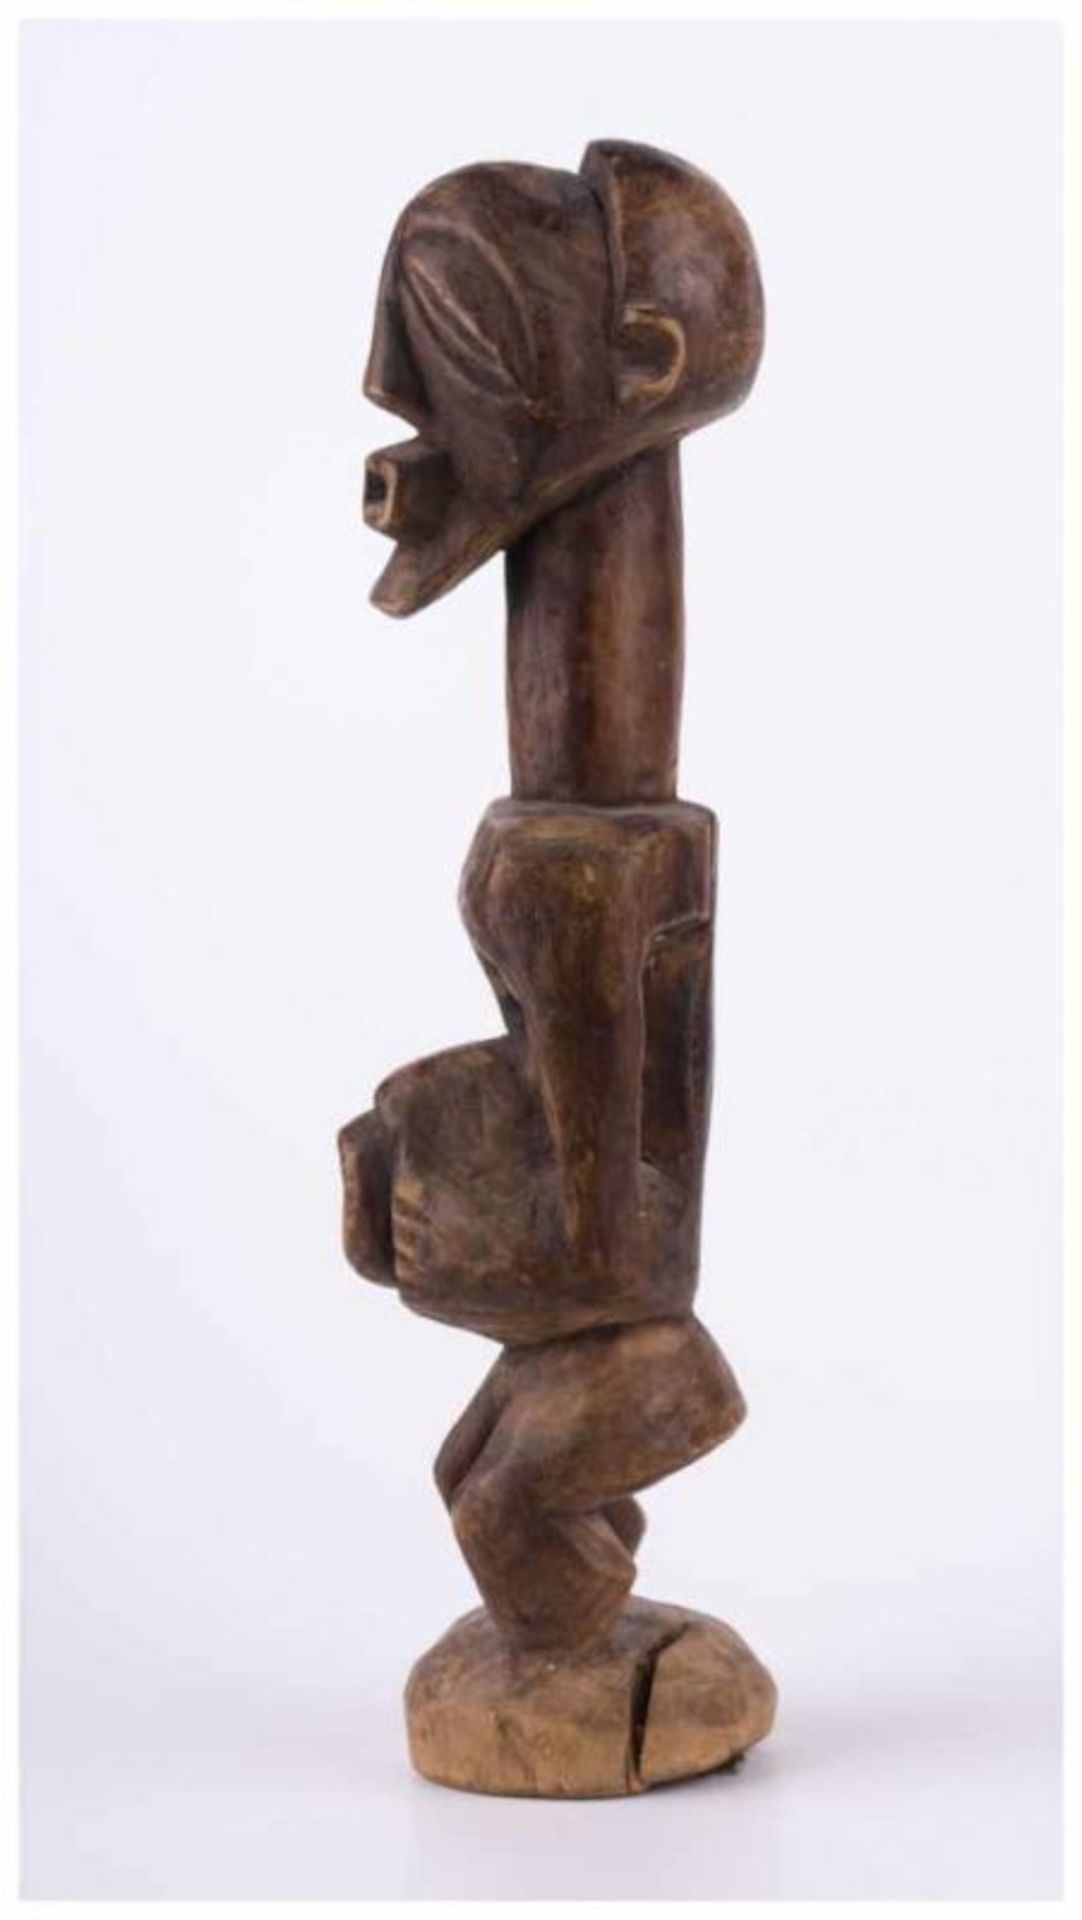 Fruchtbarkeits- Figur Afrika / Fertility figure, Africa - Holz, H: 29,5 cm - [...] - Bild 5 aus 8